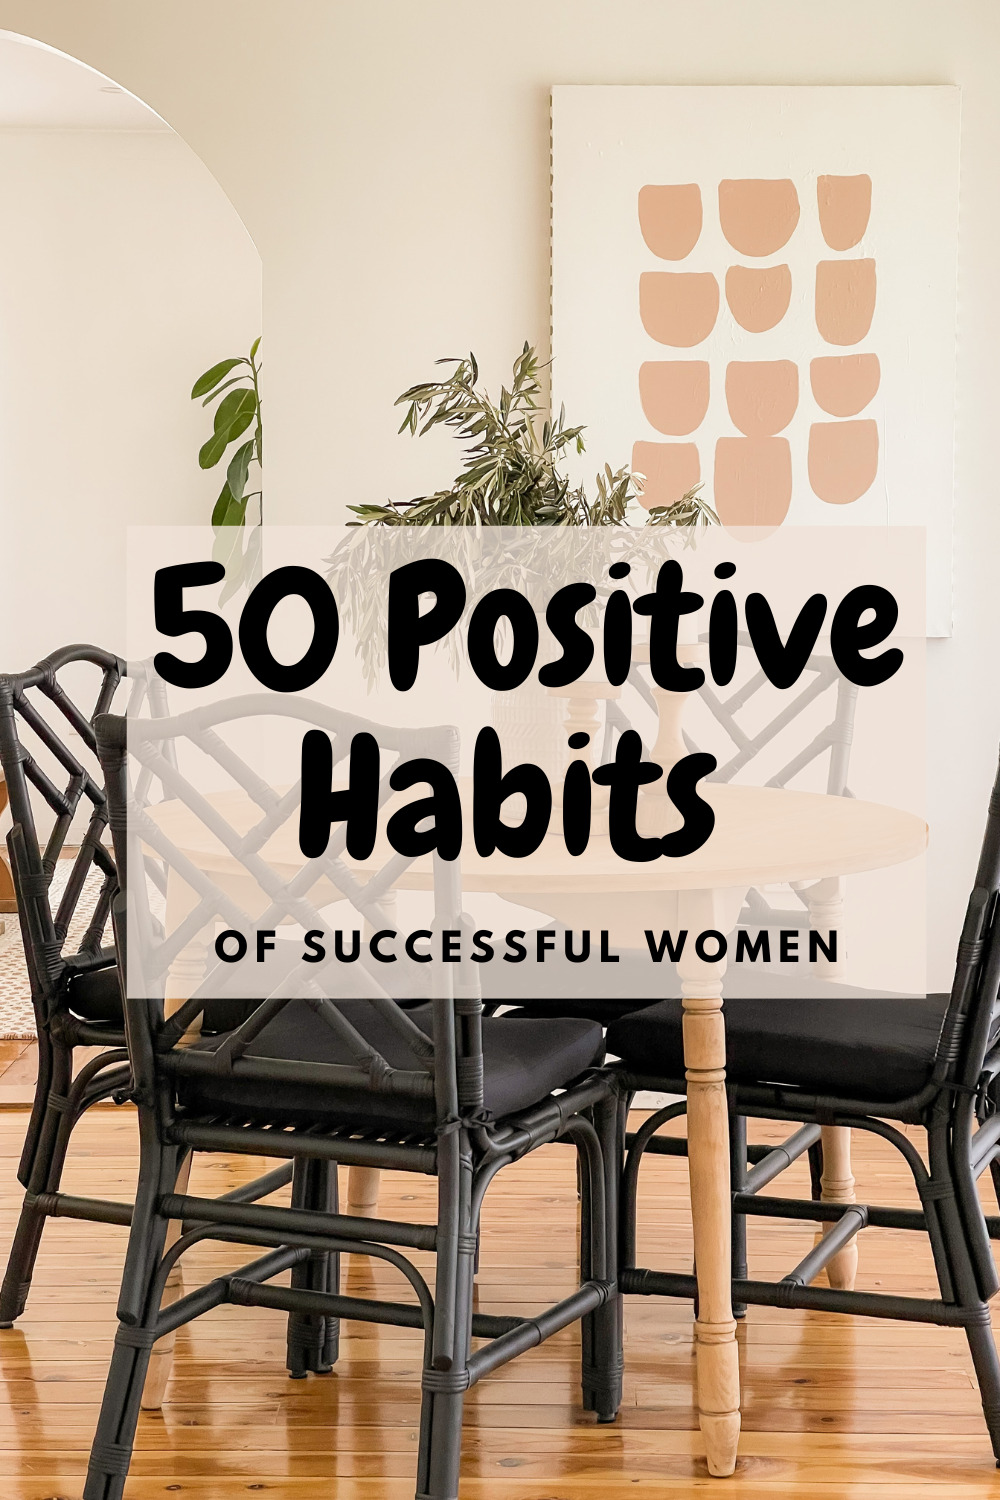 50 Positive Habits of Successful Women